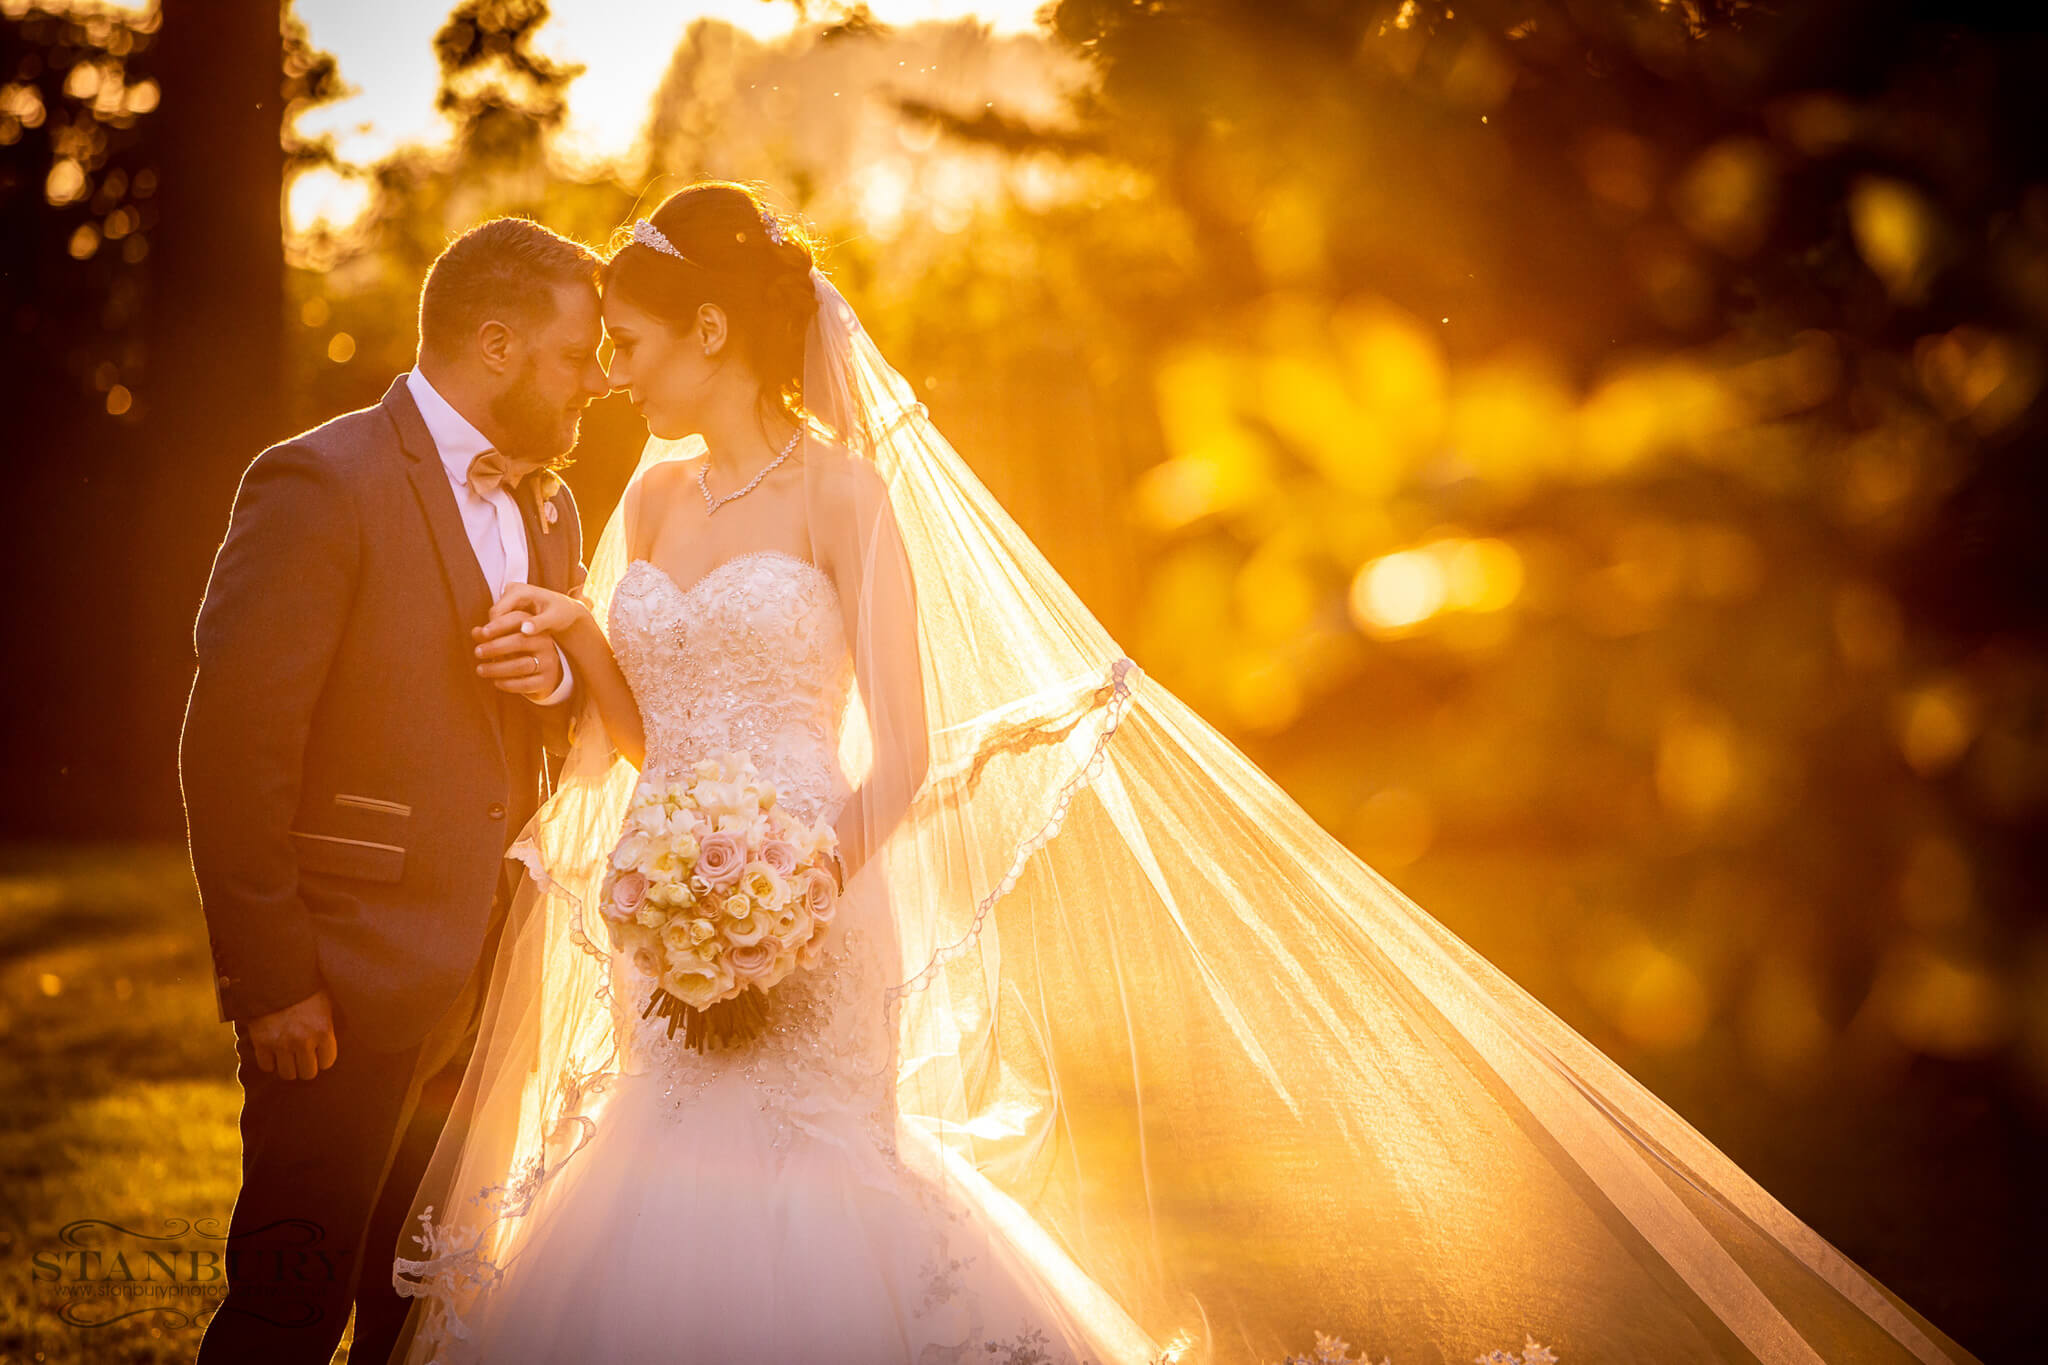 sunset-bride-groom-colshaw-hall-wedding-cheshire-photographers-stanbury